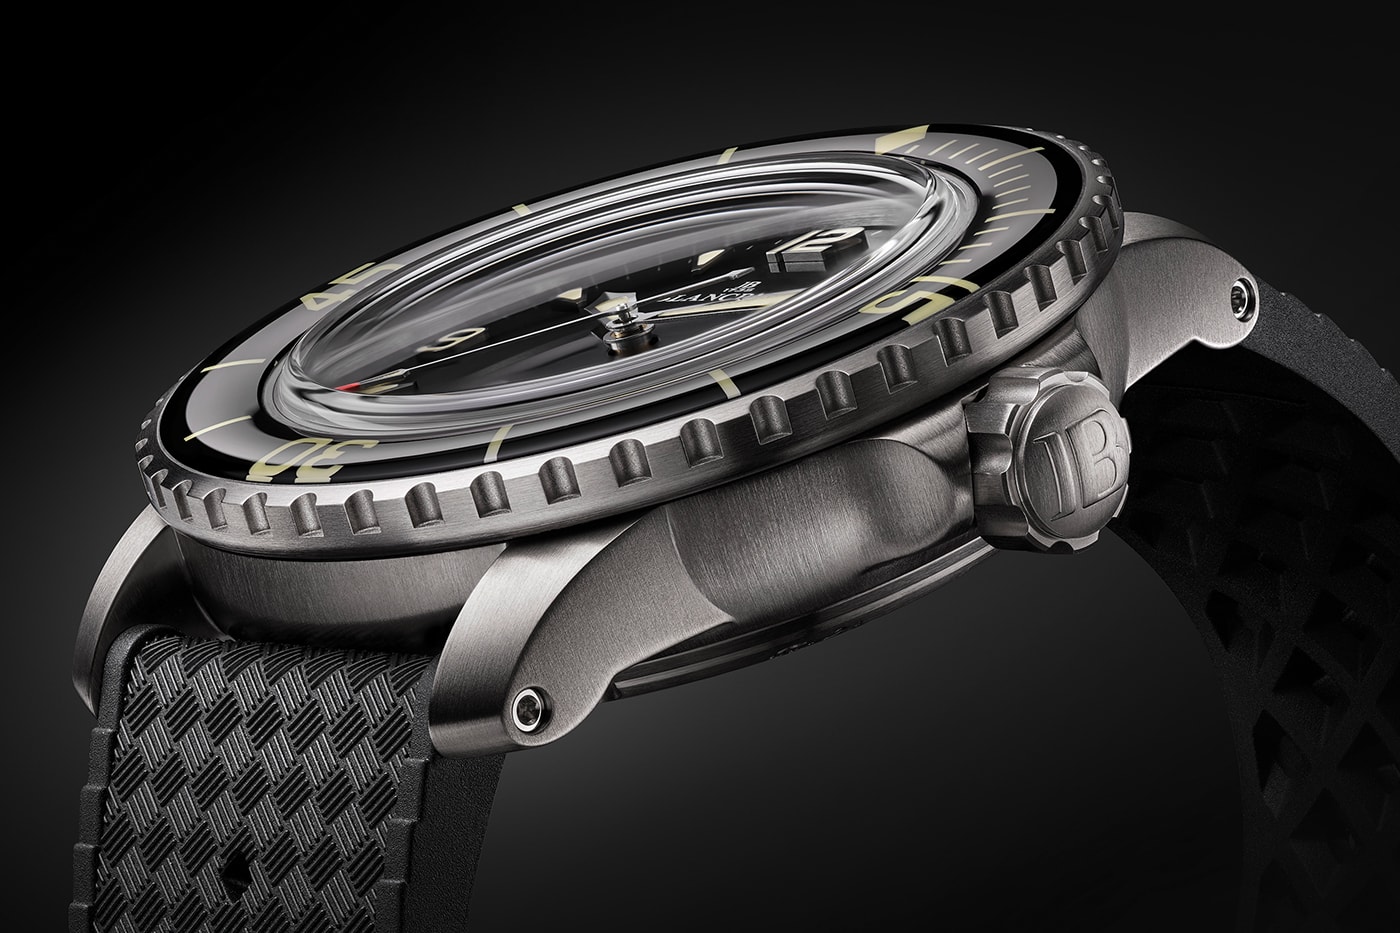 Blancpain 推出全新紅金、鈦金屬材質 Fifty Fathoms Automatique 潛水錶